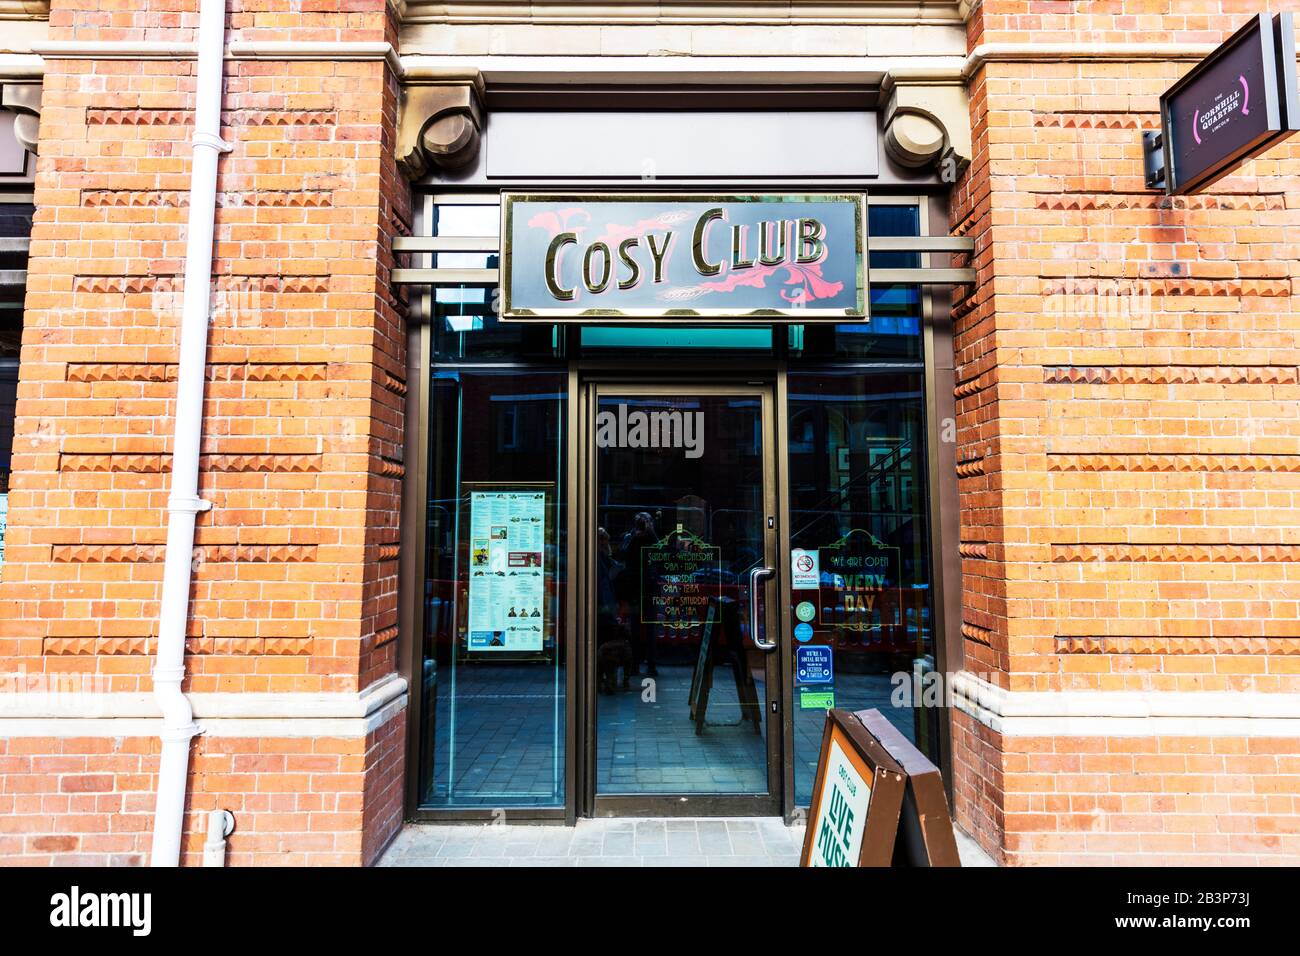 Cosy Club Restaurant Lincoln City UK, Cosy Club sign, Cosy Club restaurant, Cosy Club shop front, Cosy Club cafe, Cosy Club, Cosy Club sign, Stock Photo